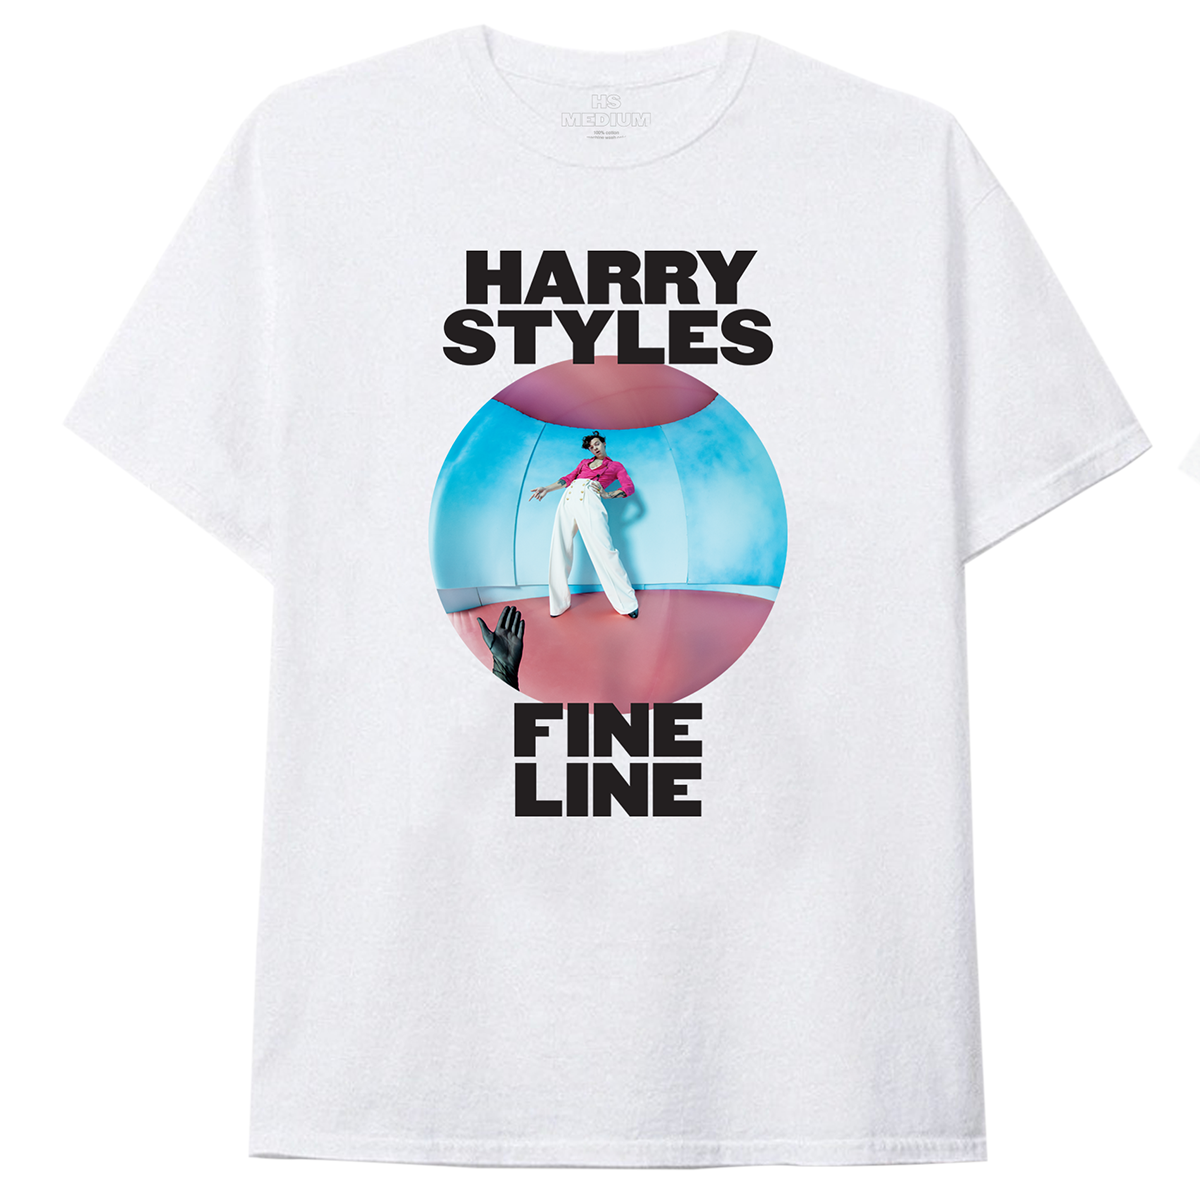 Harry Styles Merch: T-Shirts, Hats, Vinyl, Pins, Mugs - Harry Styles US